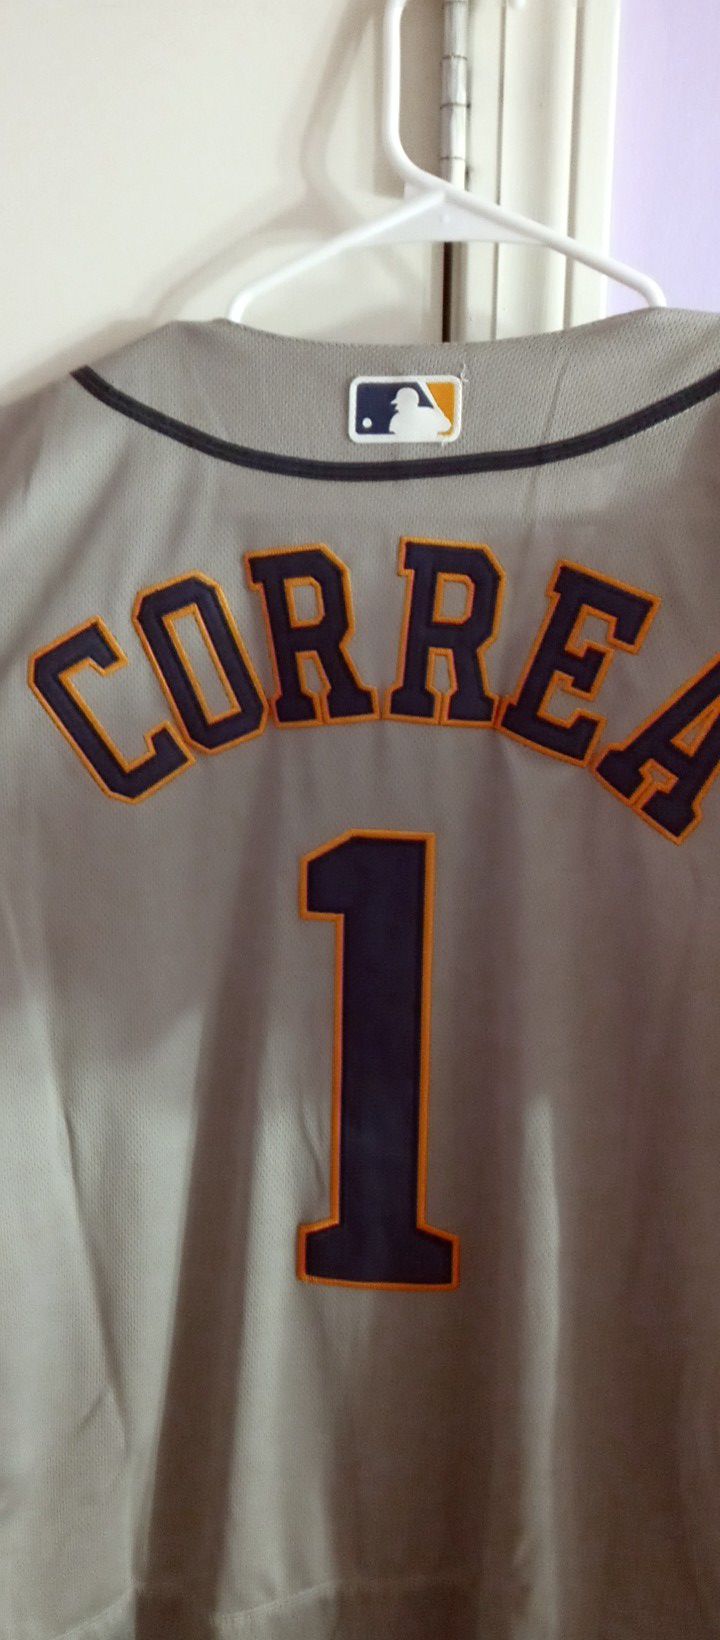 CARLOS CORREA Houston Astros Majestic Away Baseball Jersey $49 or best offer